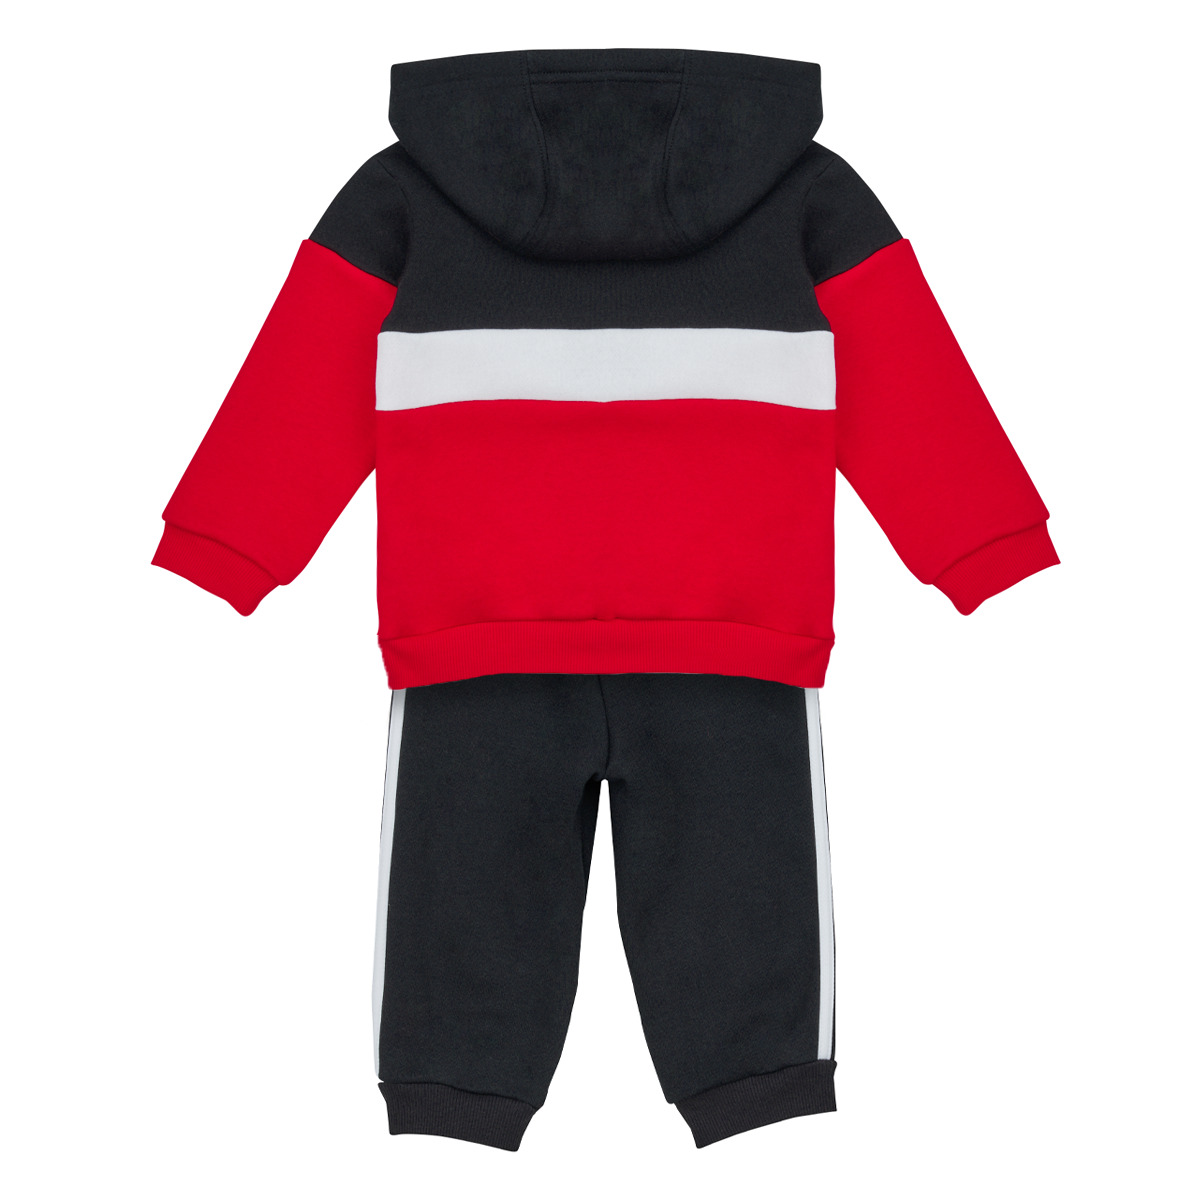 Adidas Sportswear Noir / Blanc / Rouge 3S TIB FL TS EByC4kD0